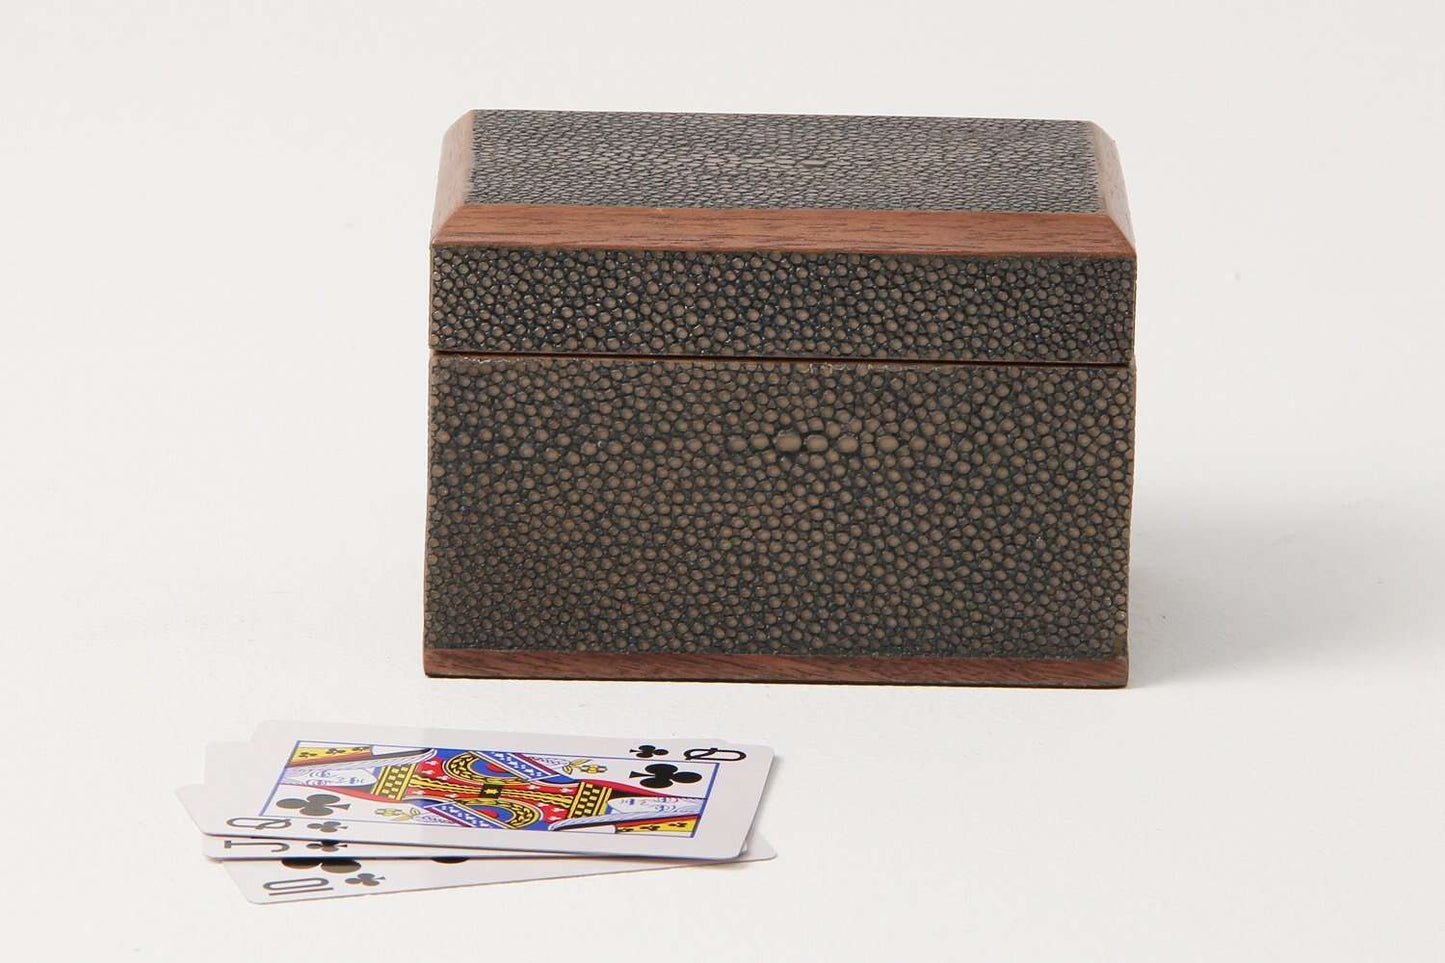  playing card box brown shagreen playing card box